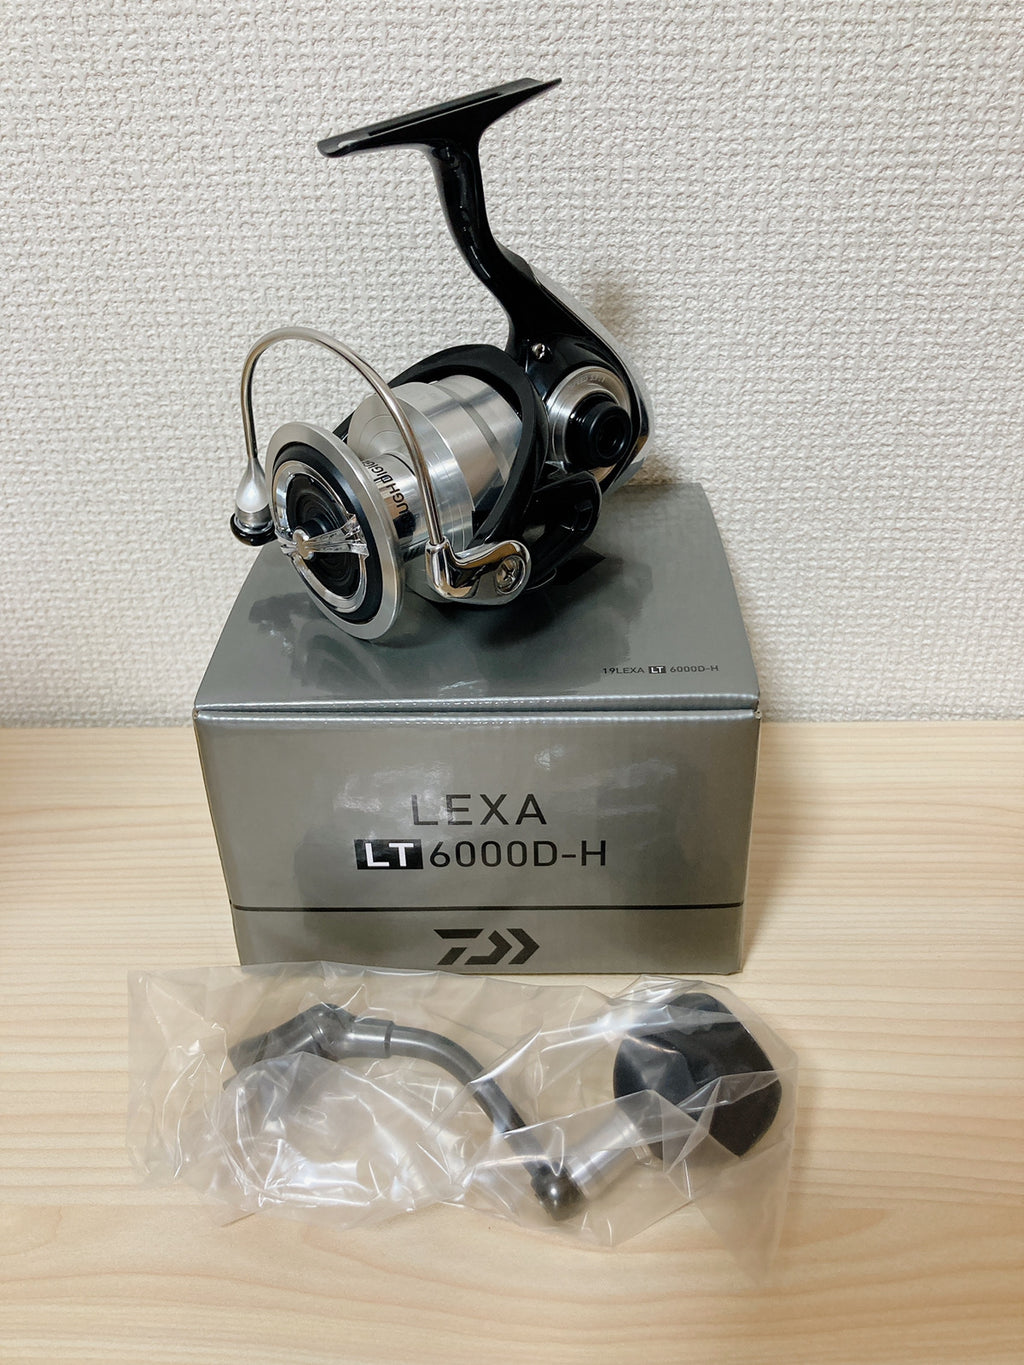 DAIWA Spinning Reel 6000 LEXA LT6000D-H 2019 Gear Ratio 5.7:1 IN BOX